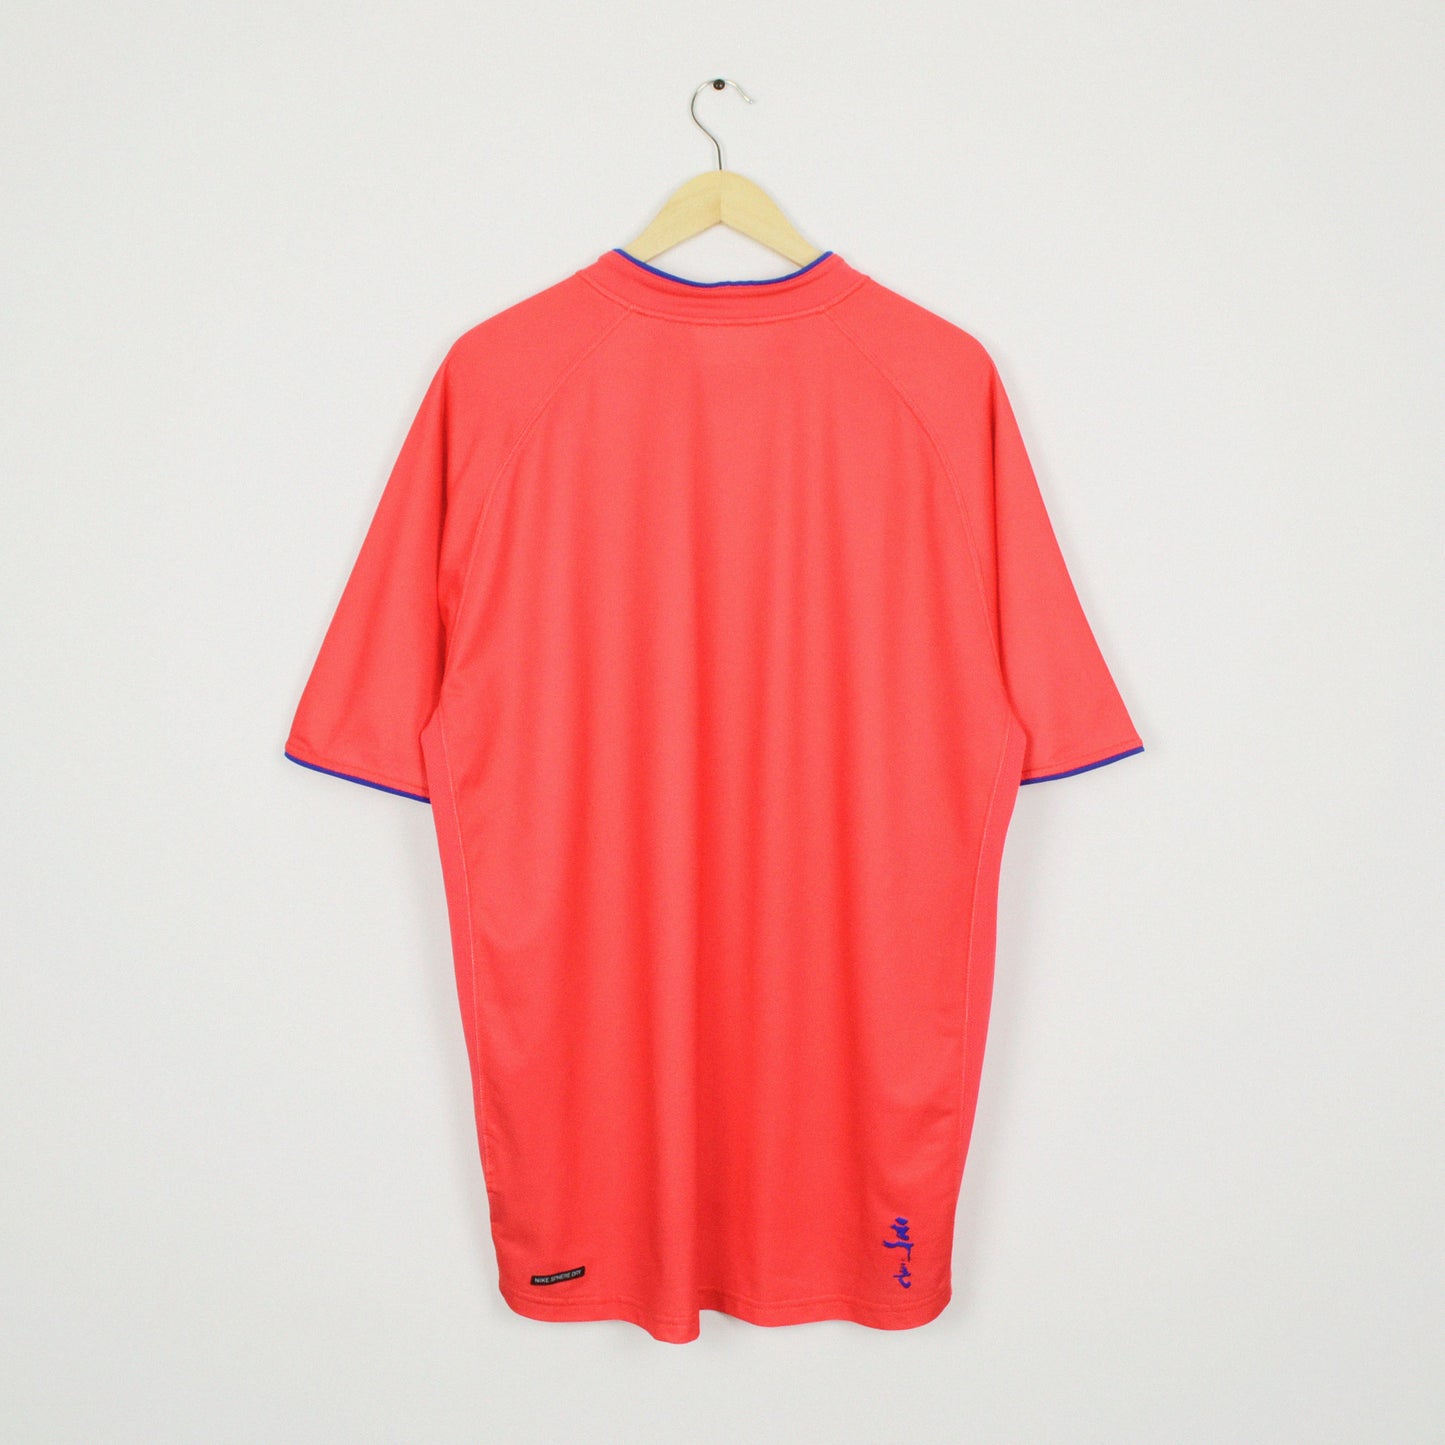 2006-08 Nike South Korea Home Shirt XL